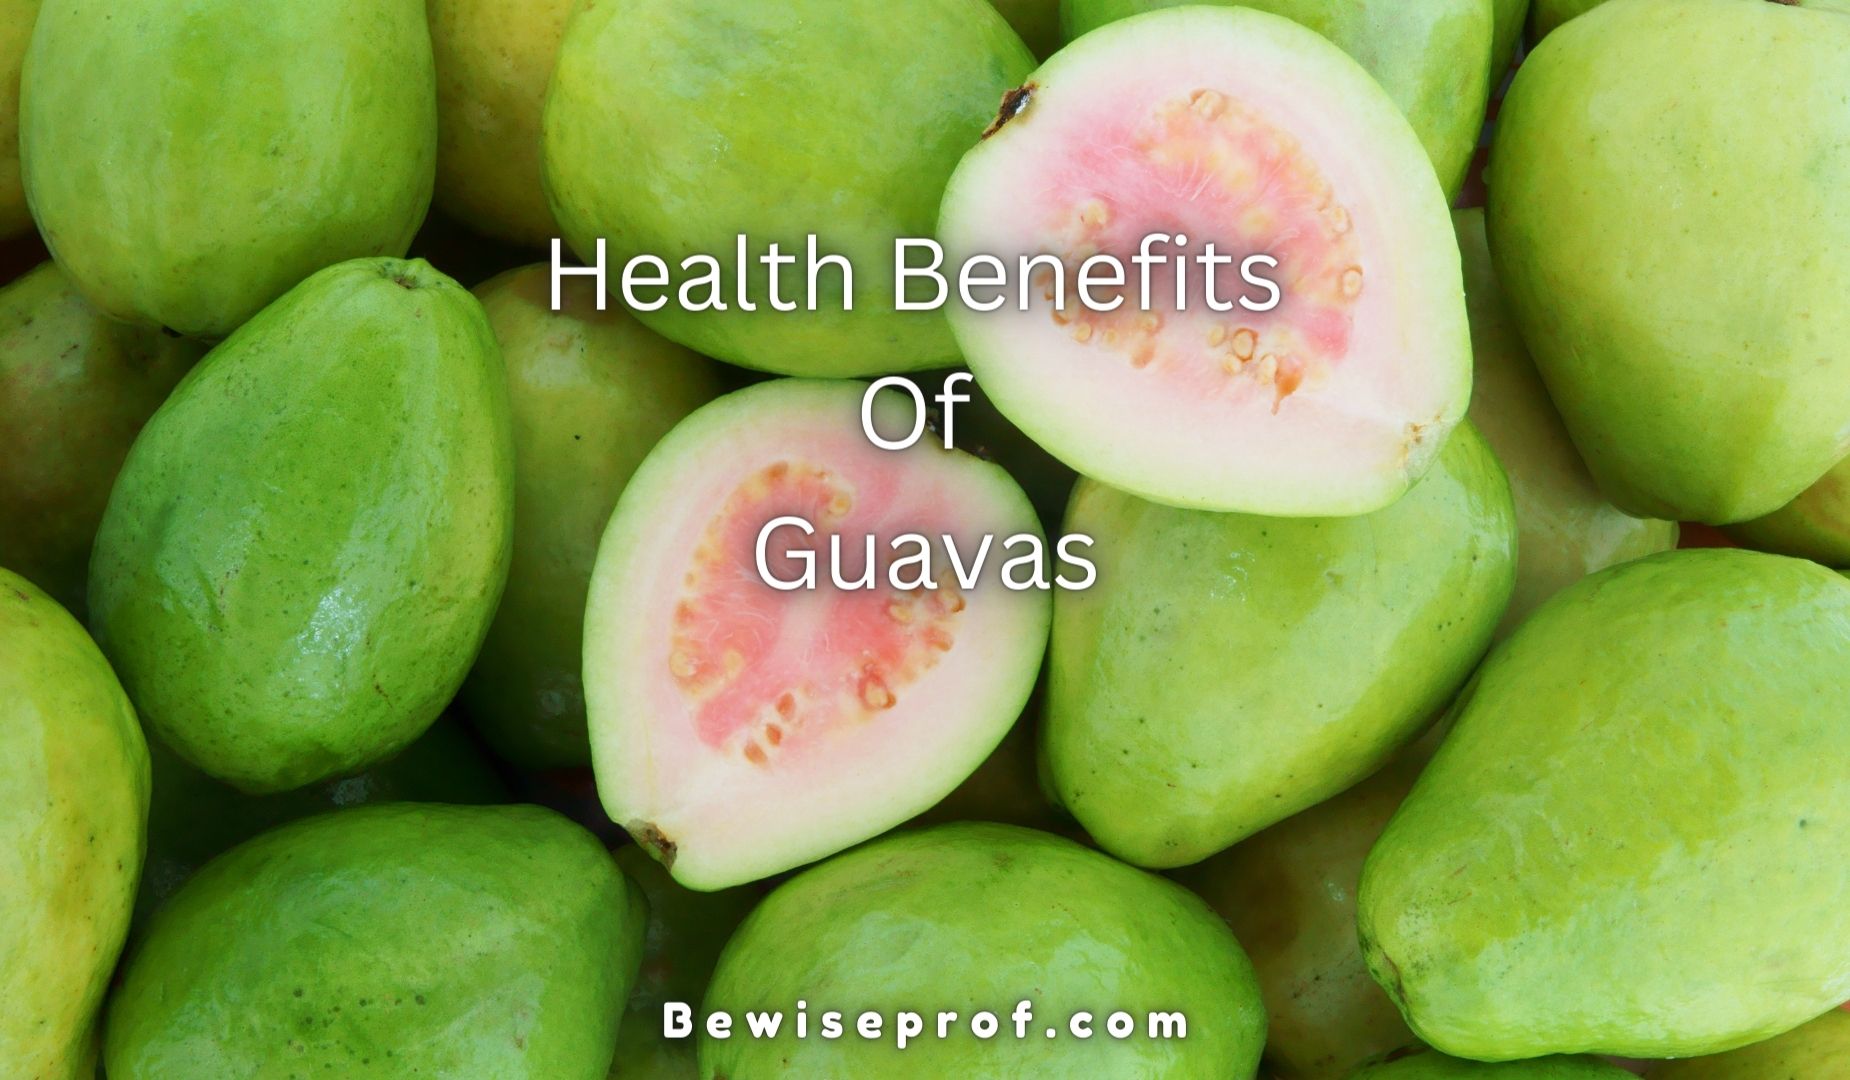 Health Benefits Of Guavas